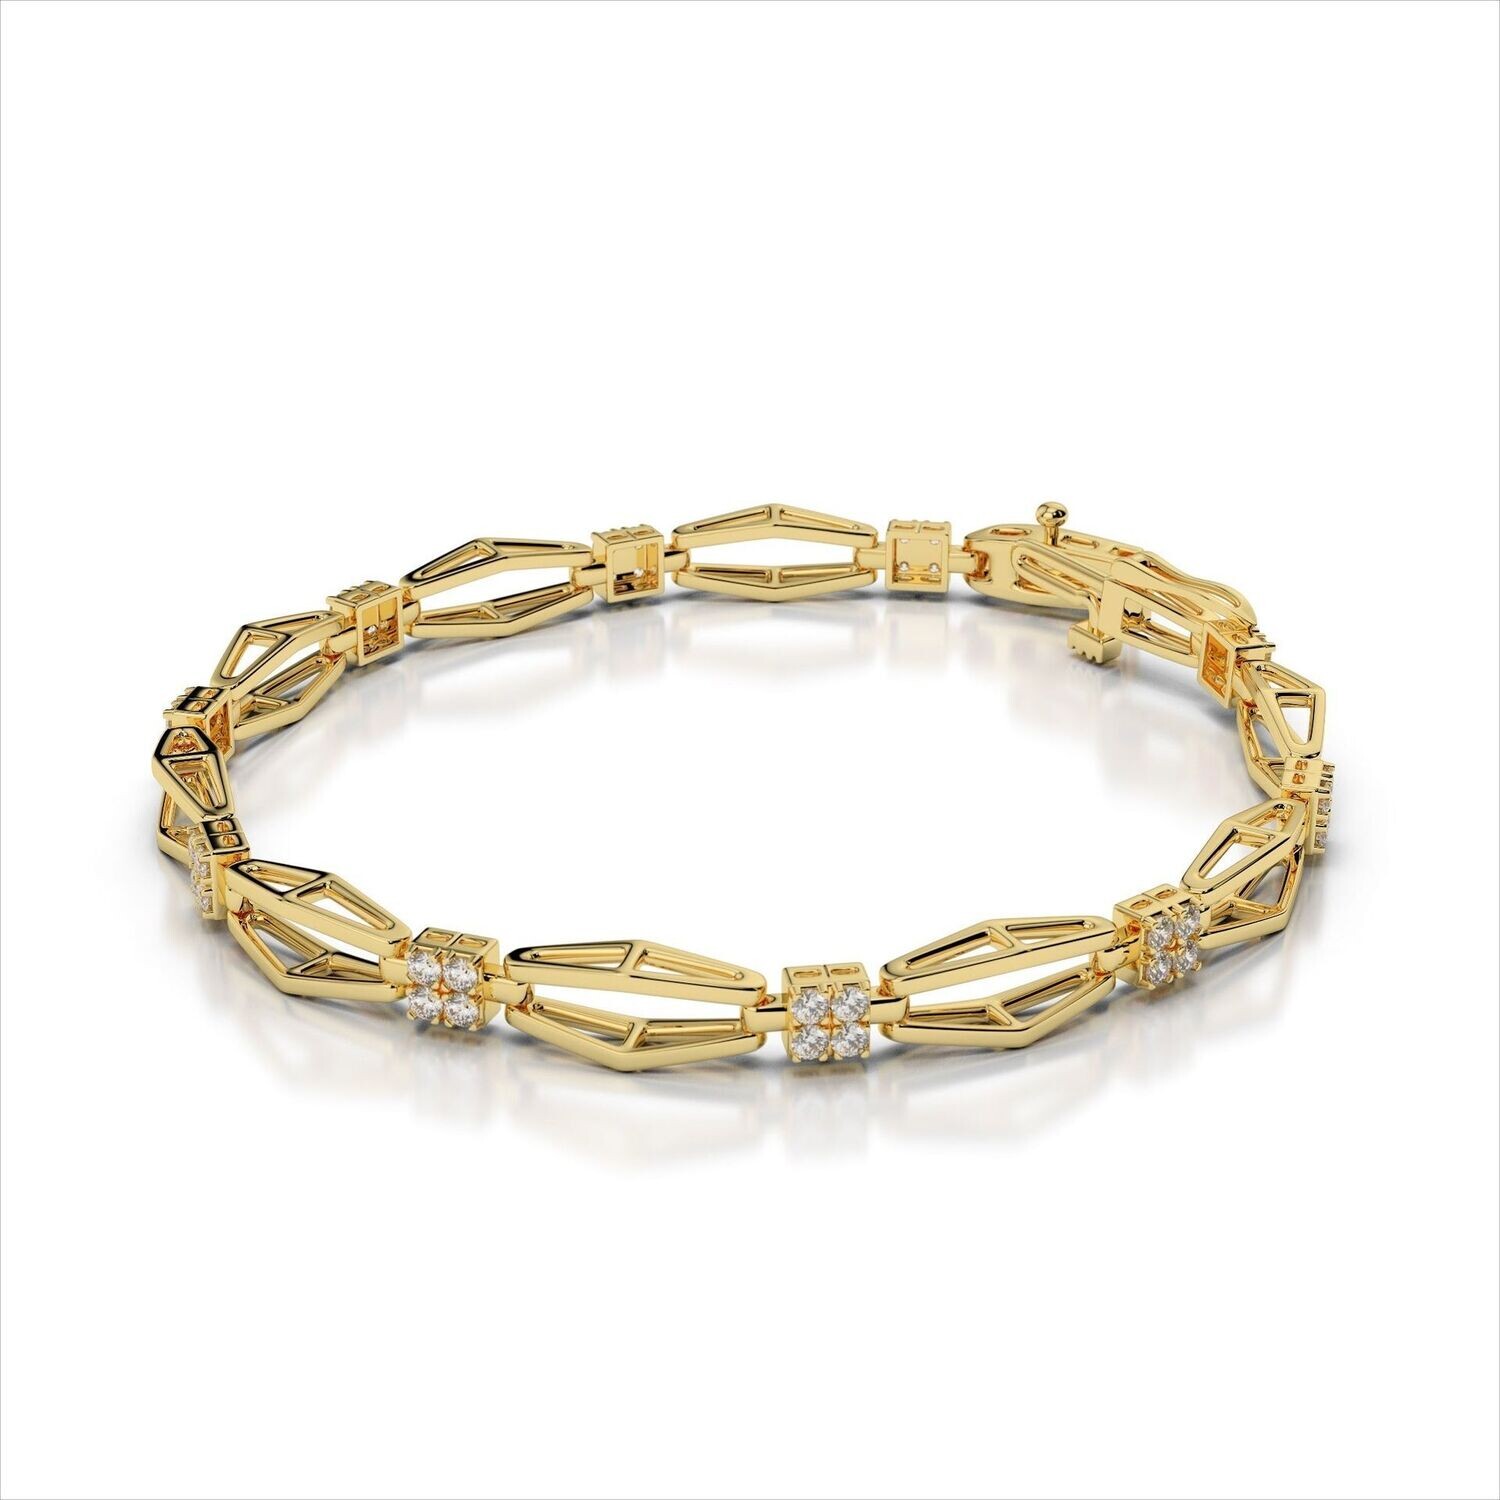 Grandeur B307 14k Yellow Gold Diamond Bracelet